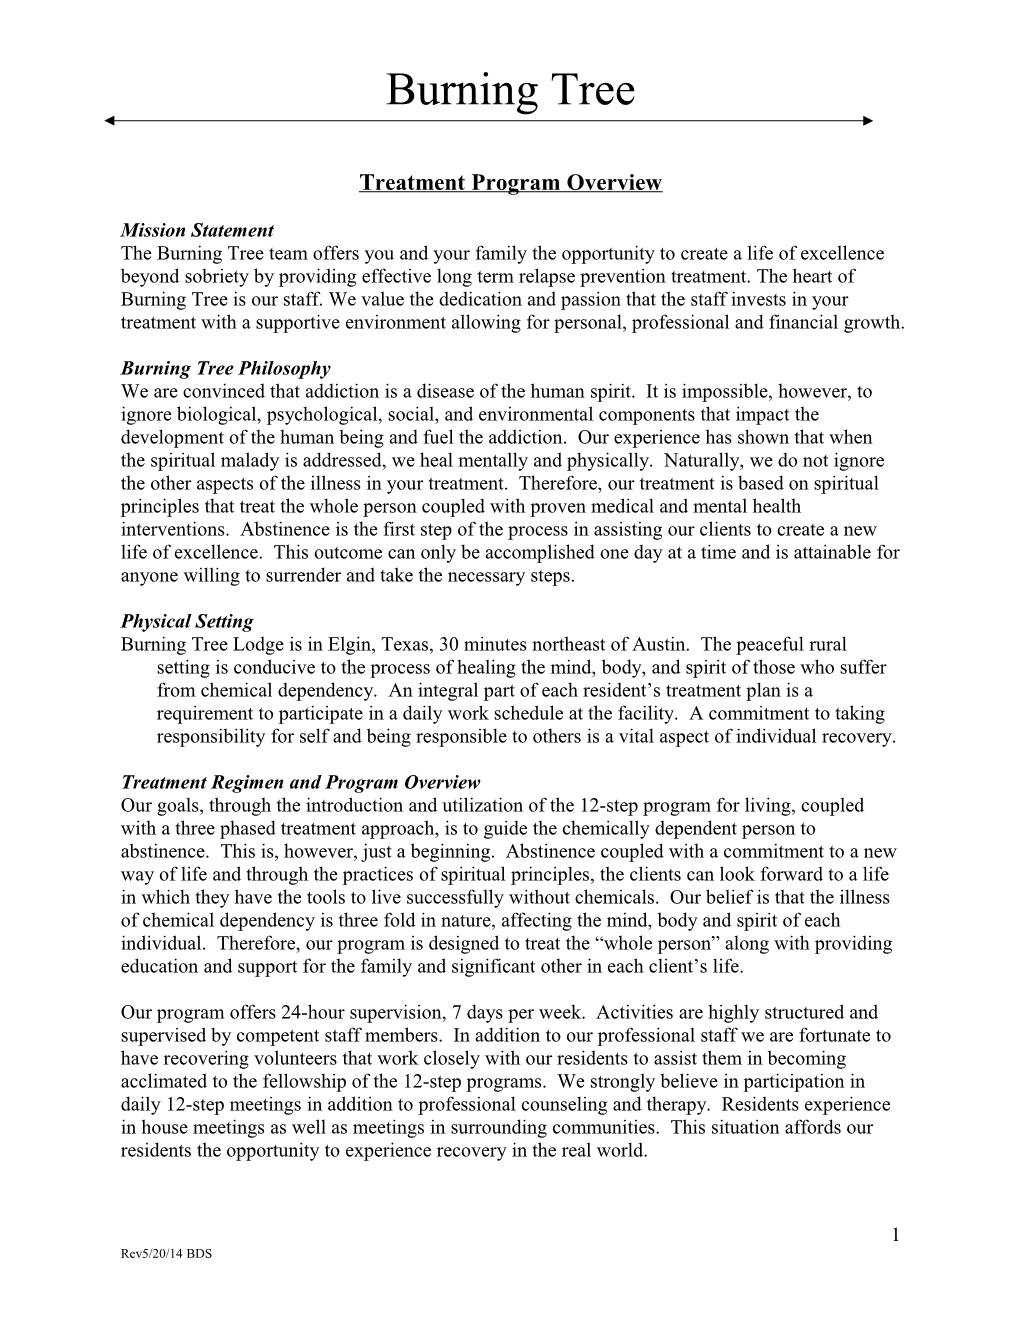 Treatment Program Overview